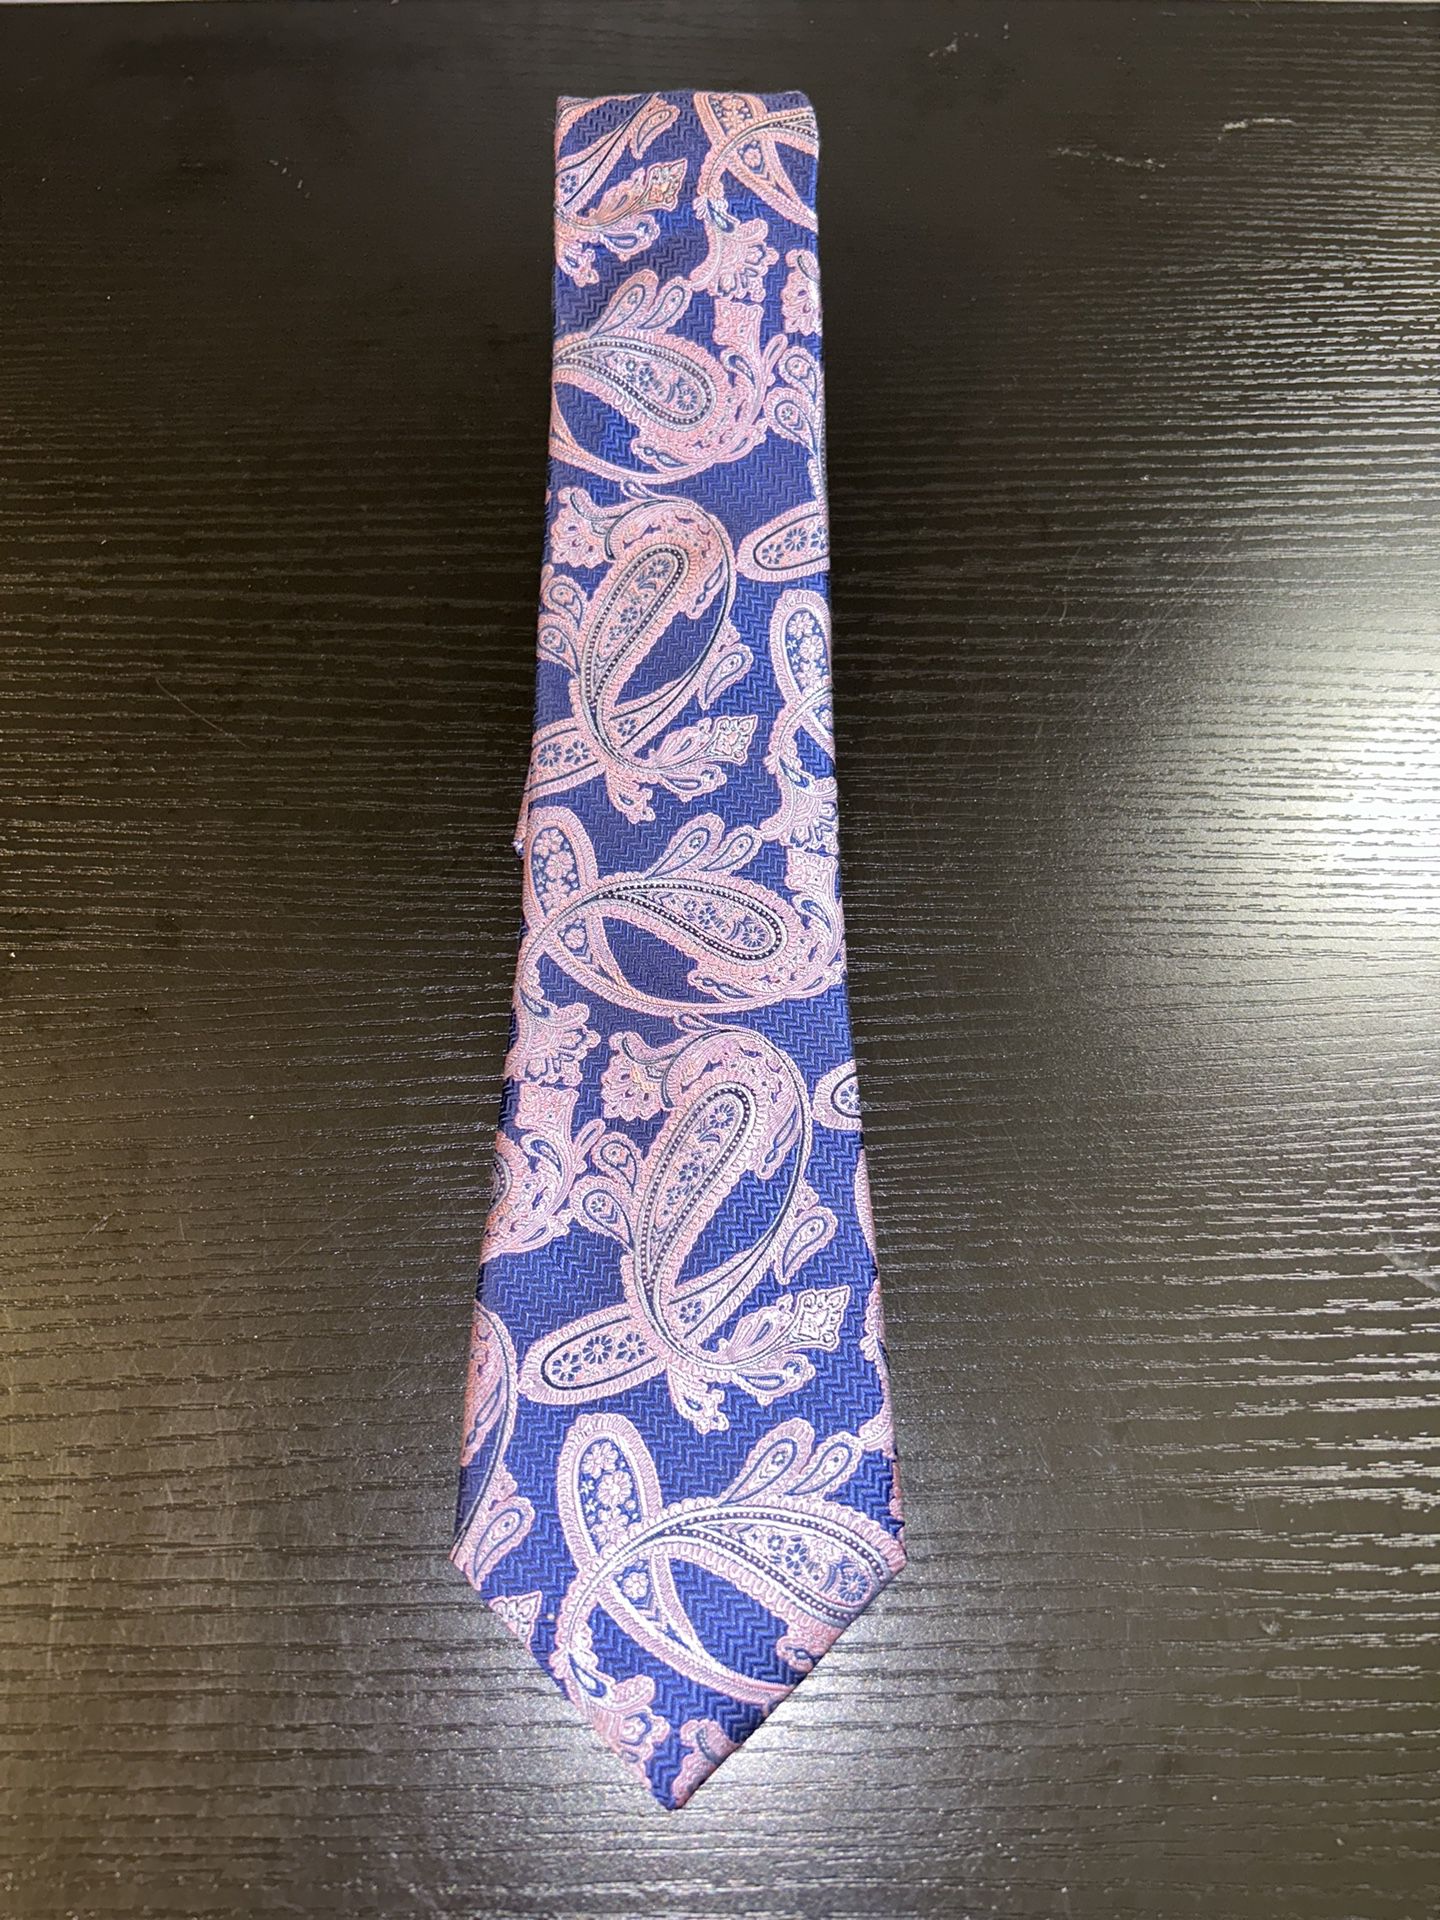 JOS. A. BANK Reserve Tie Men's 100% Silk Skinny Necktie Geometric Blue Purple